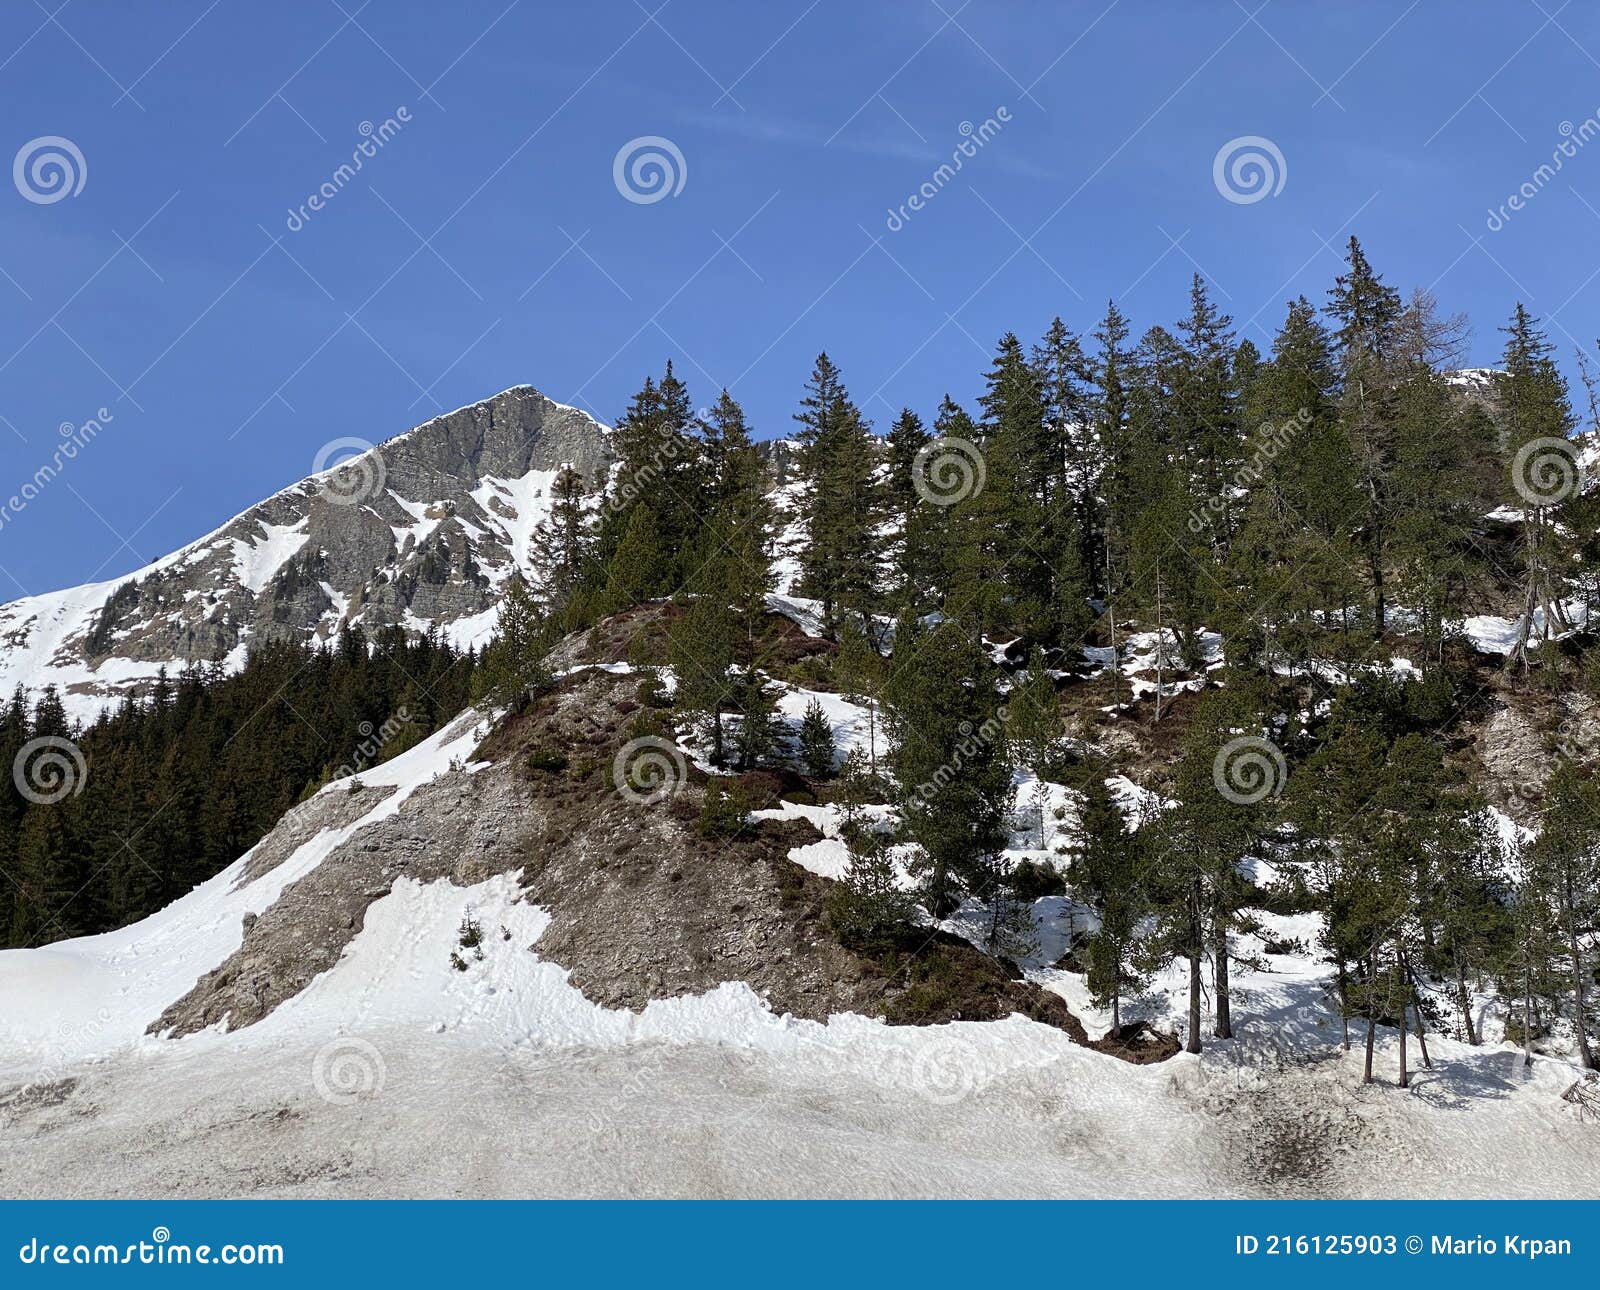 snowy alpine mountain peak la palette located in a mountain massif of the bernese alps alpes bernoises, les diablerets -